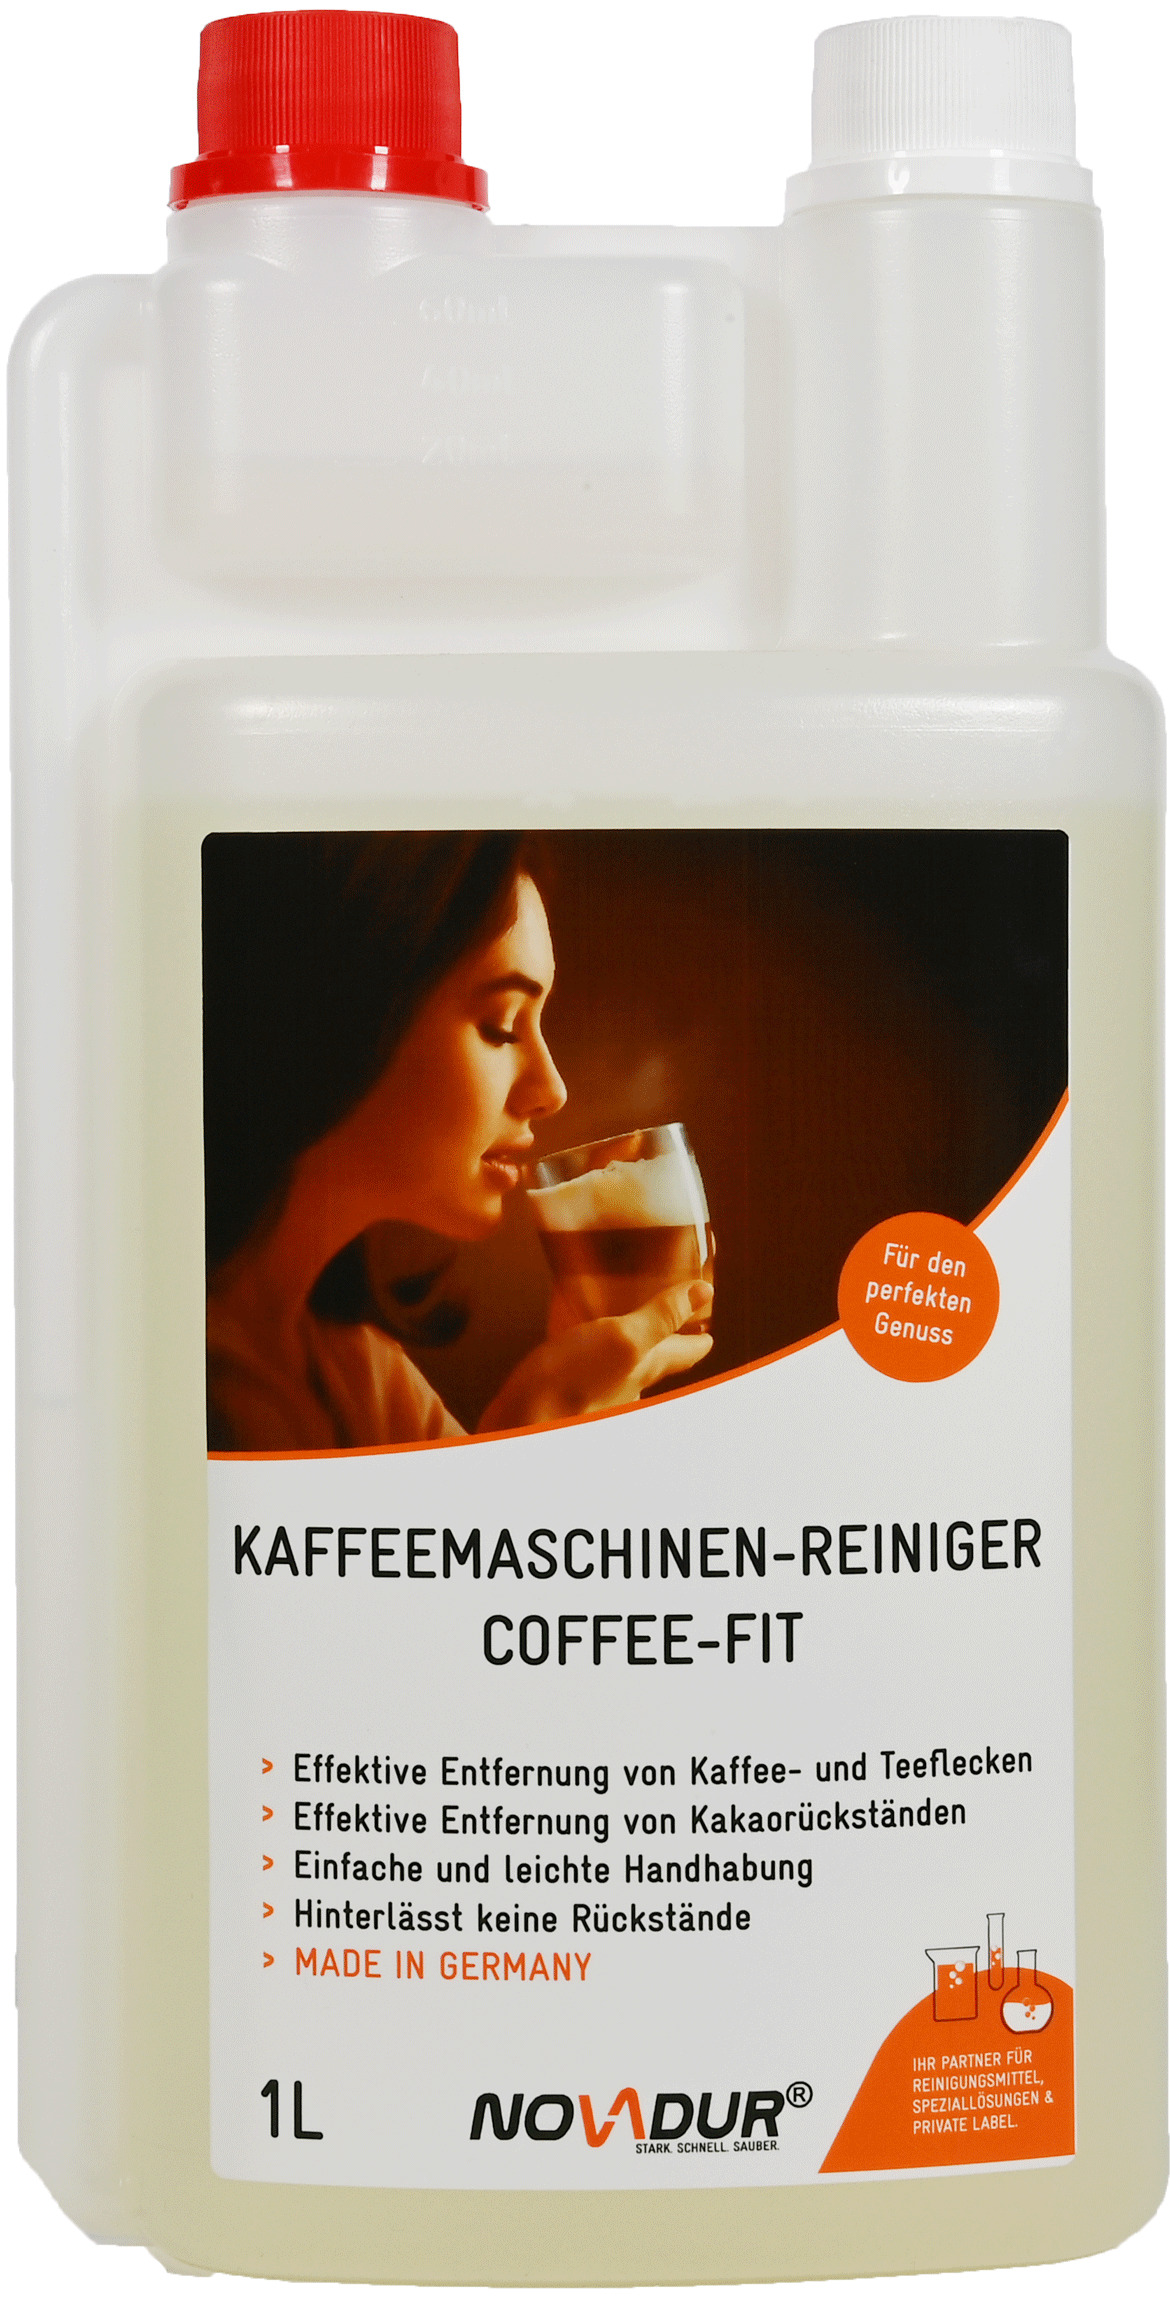 Kaffeemaschinenreiniger Coffee Fit